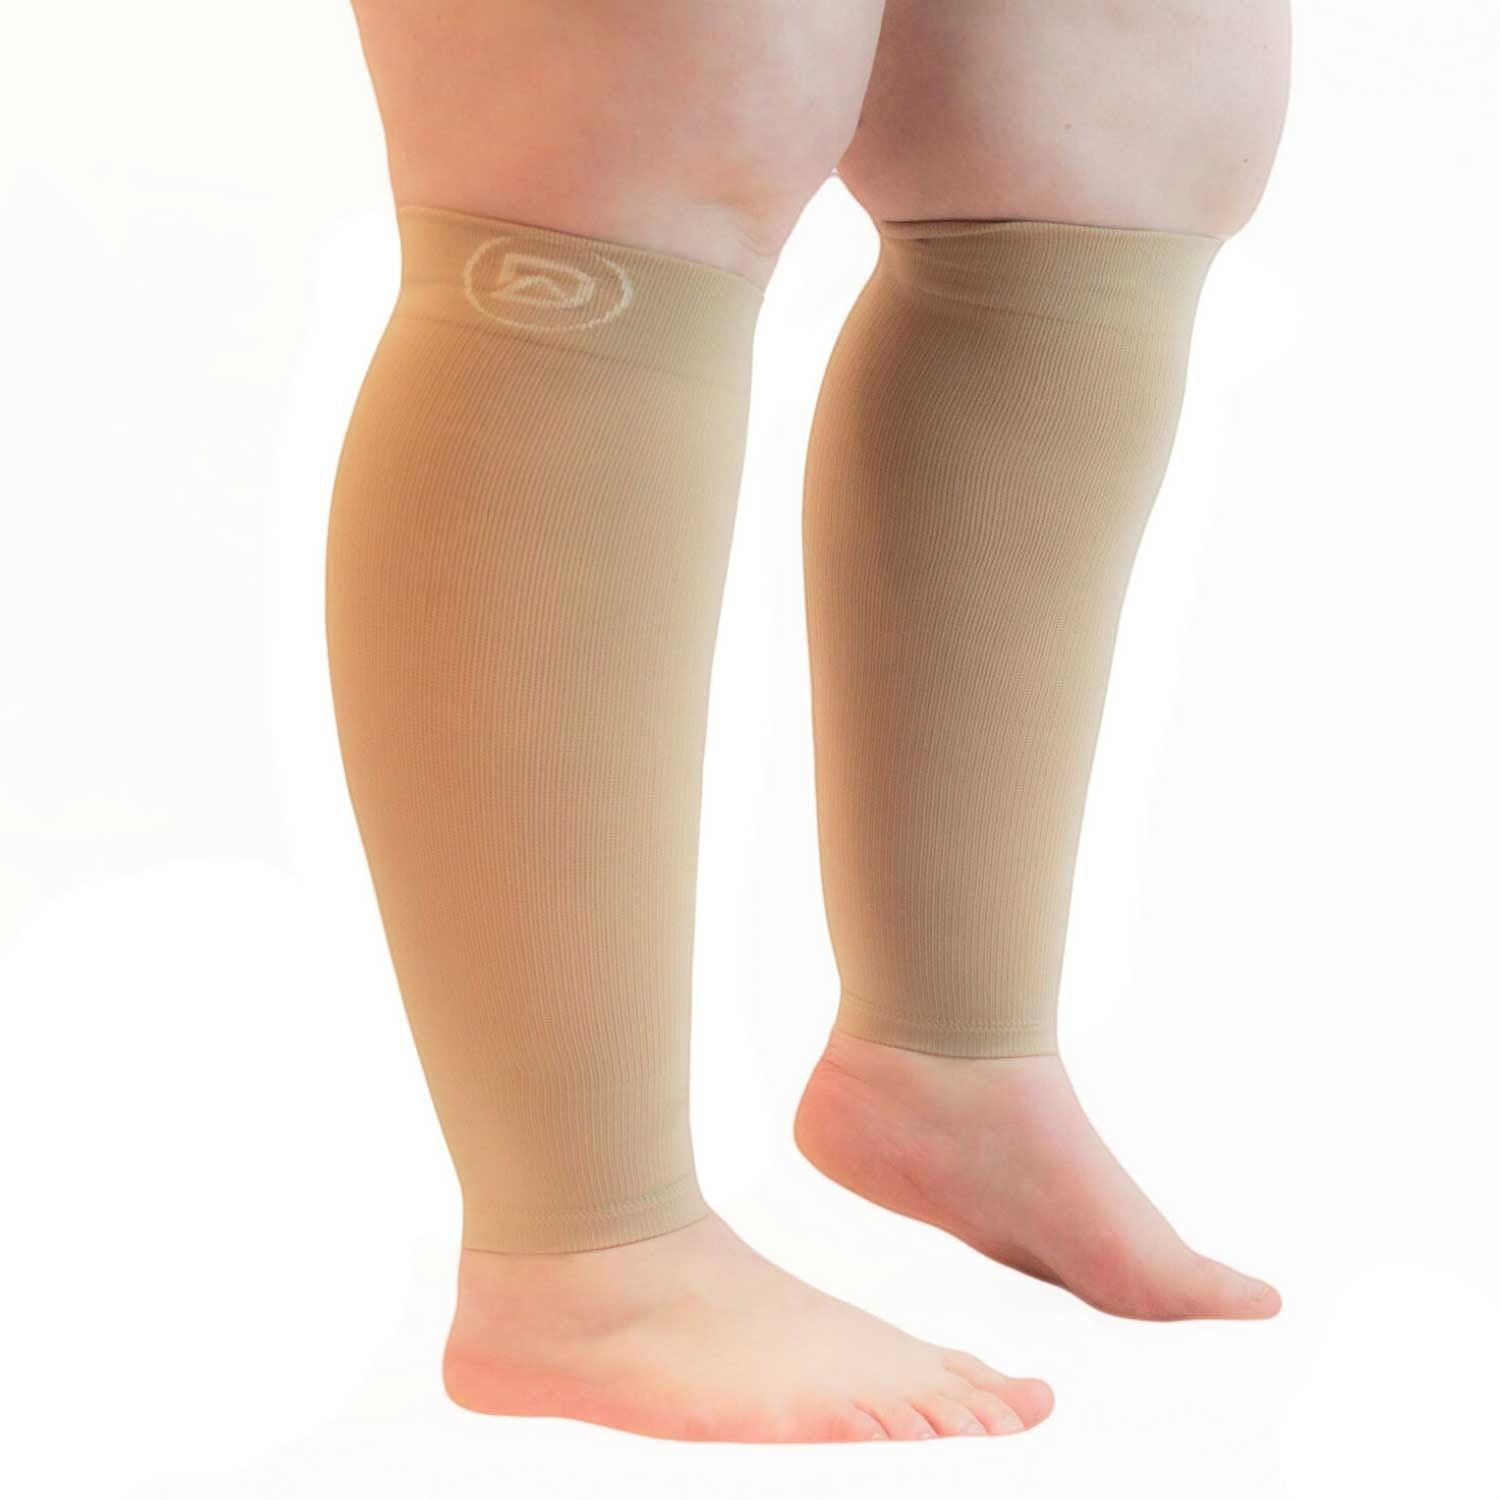  HFINGF Calf Compression Sleeves, Leg Compression Socks